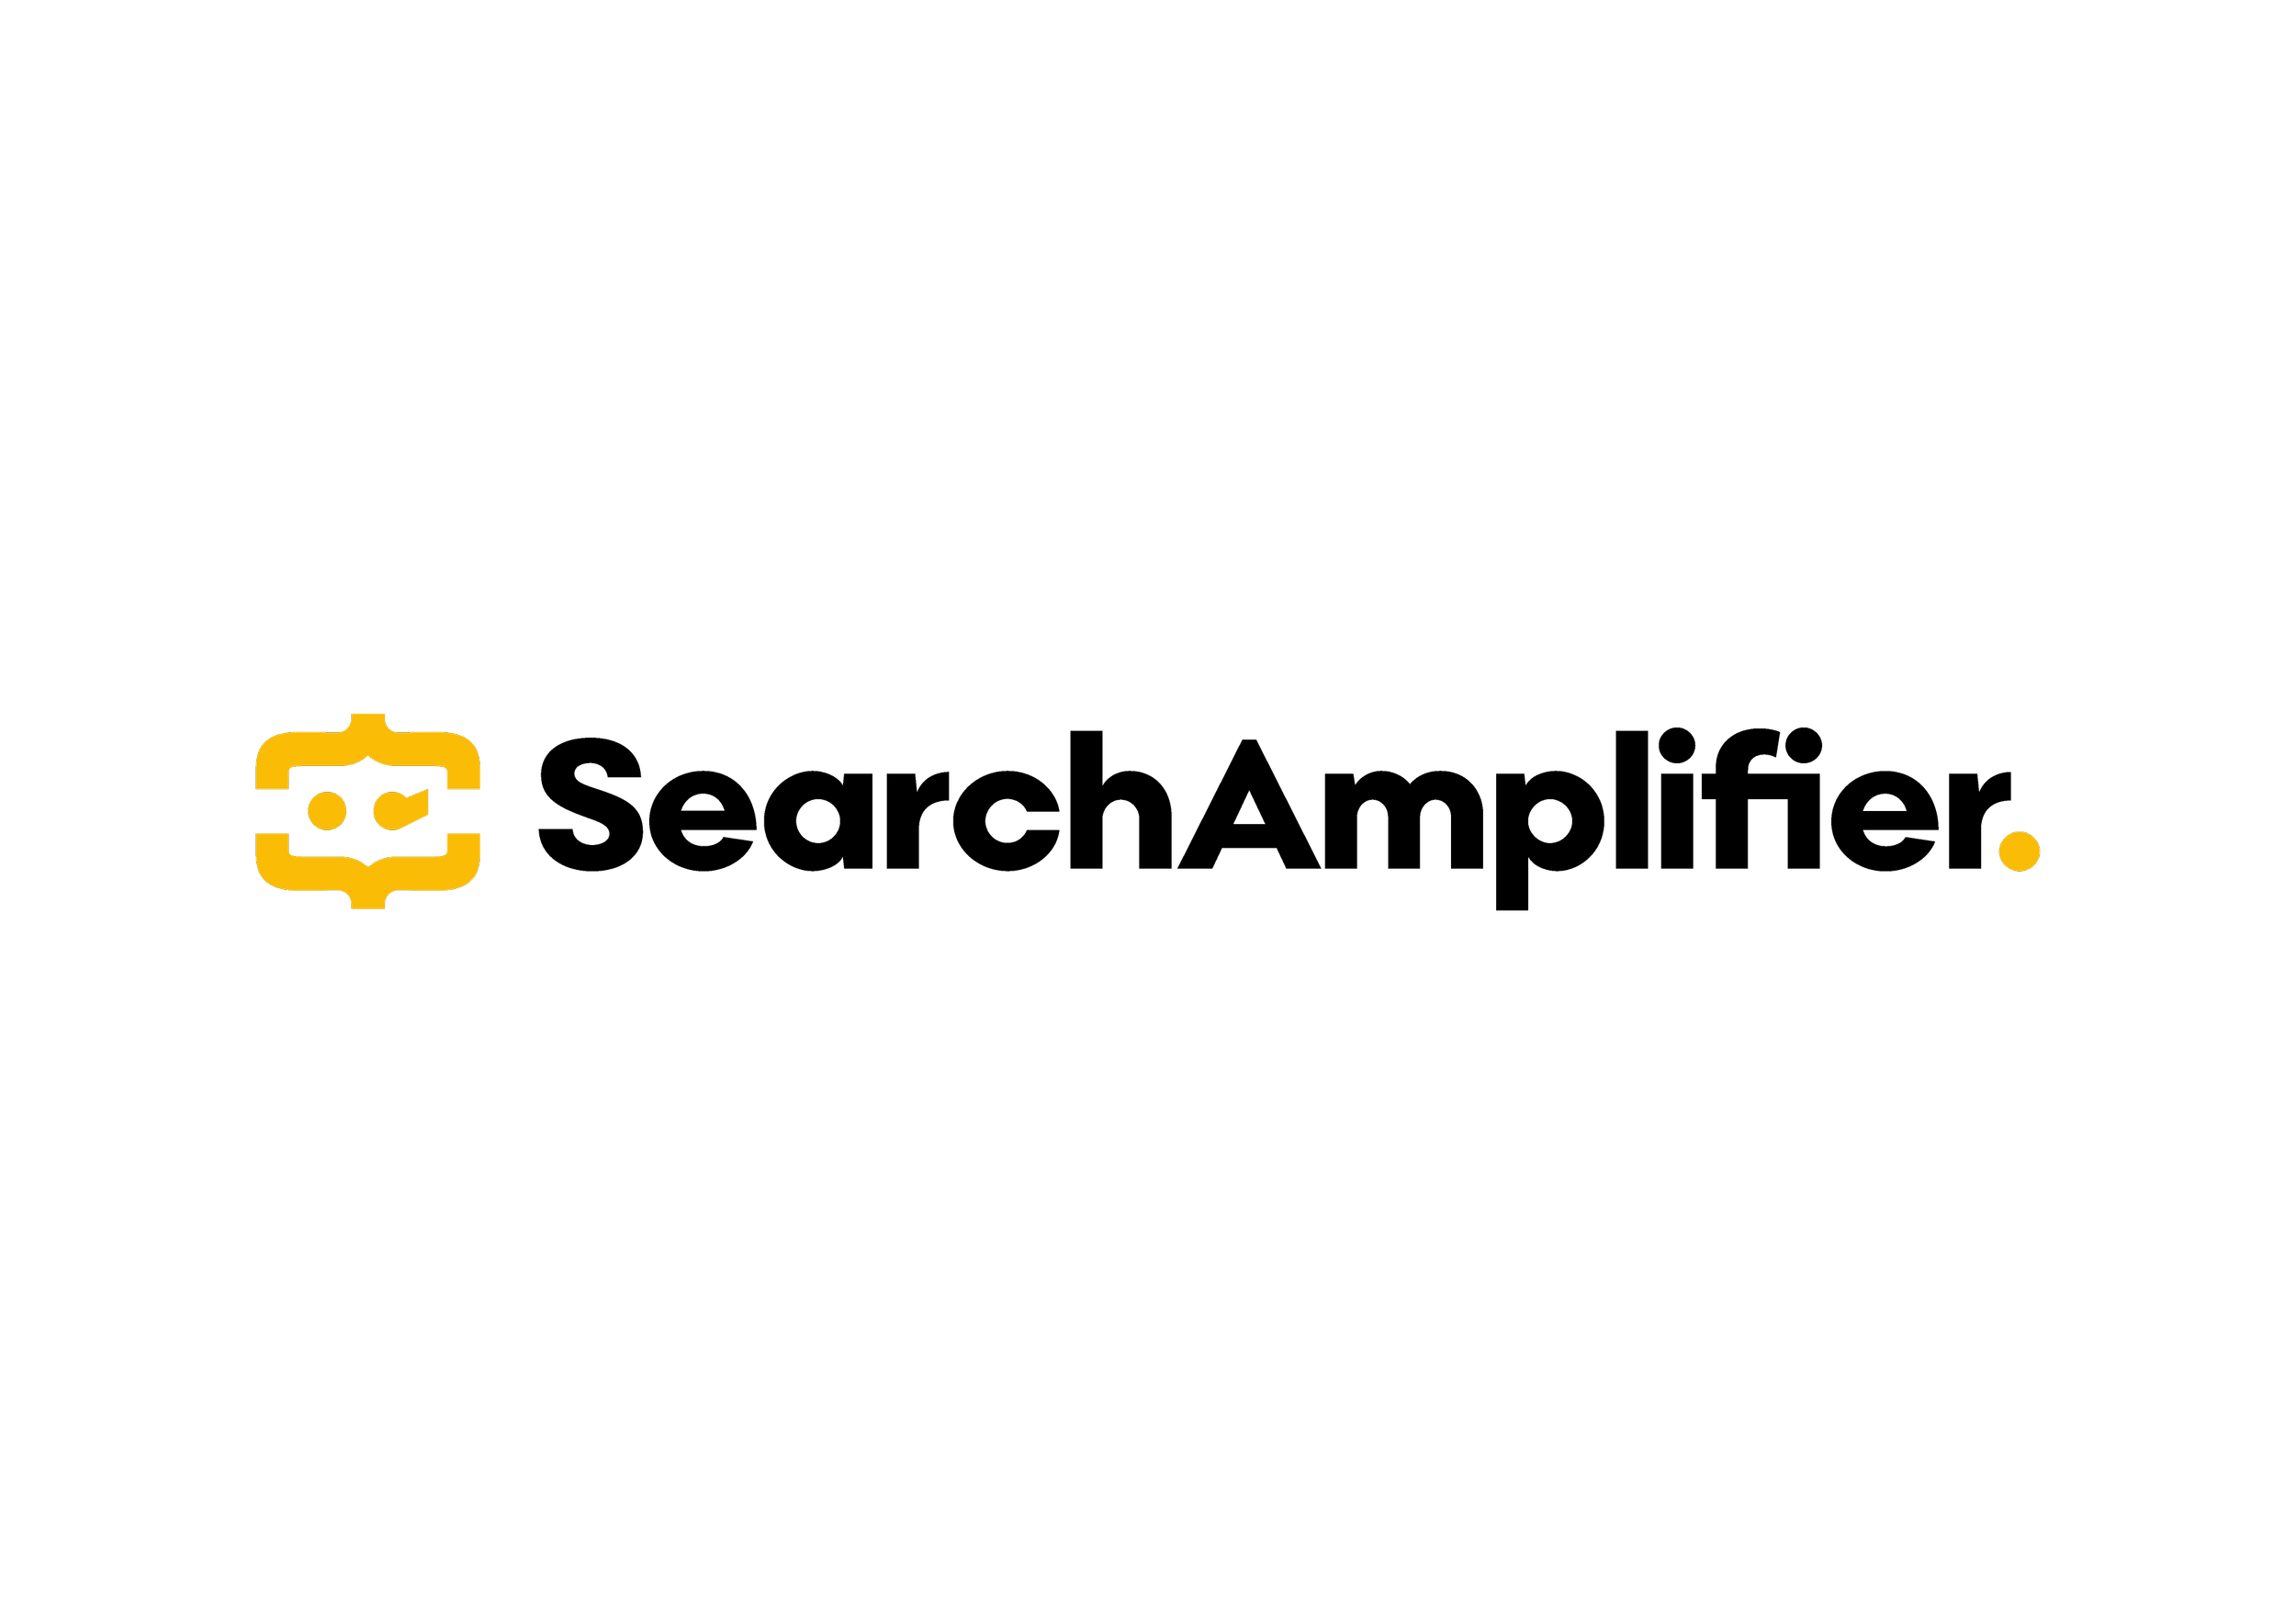 Logo SearchAmplifier-RVB-300dpi_V2.png